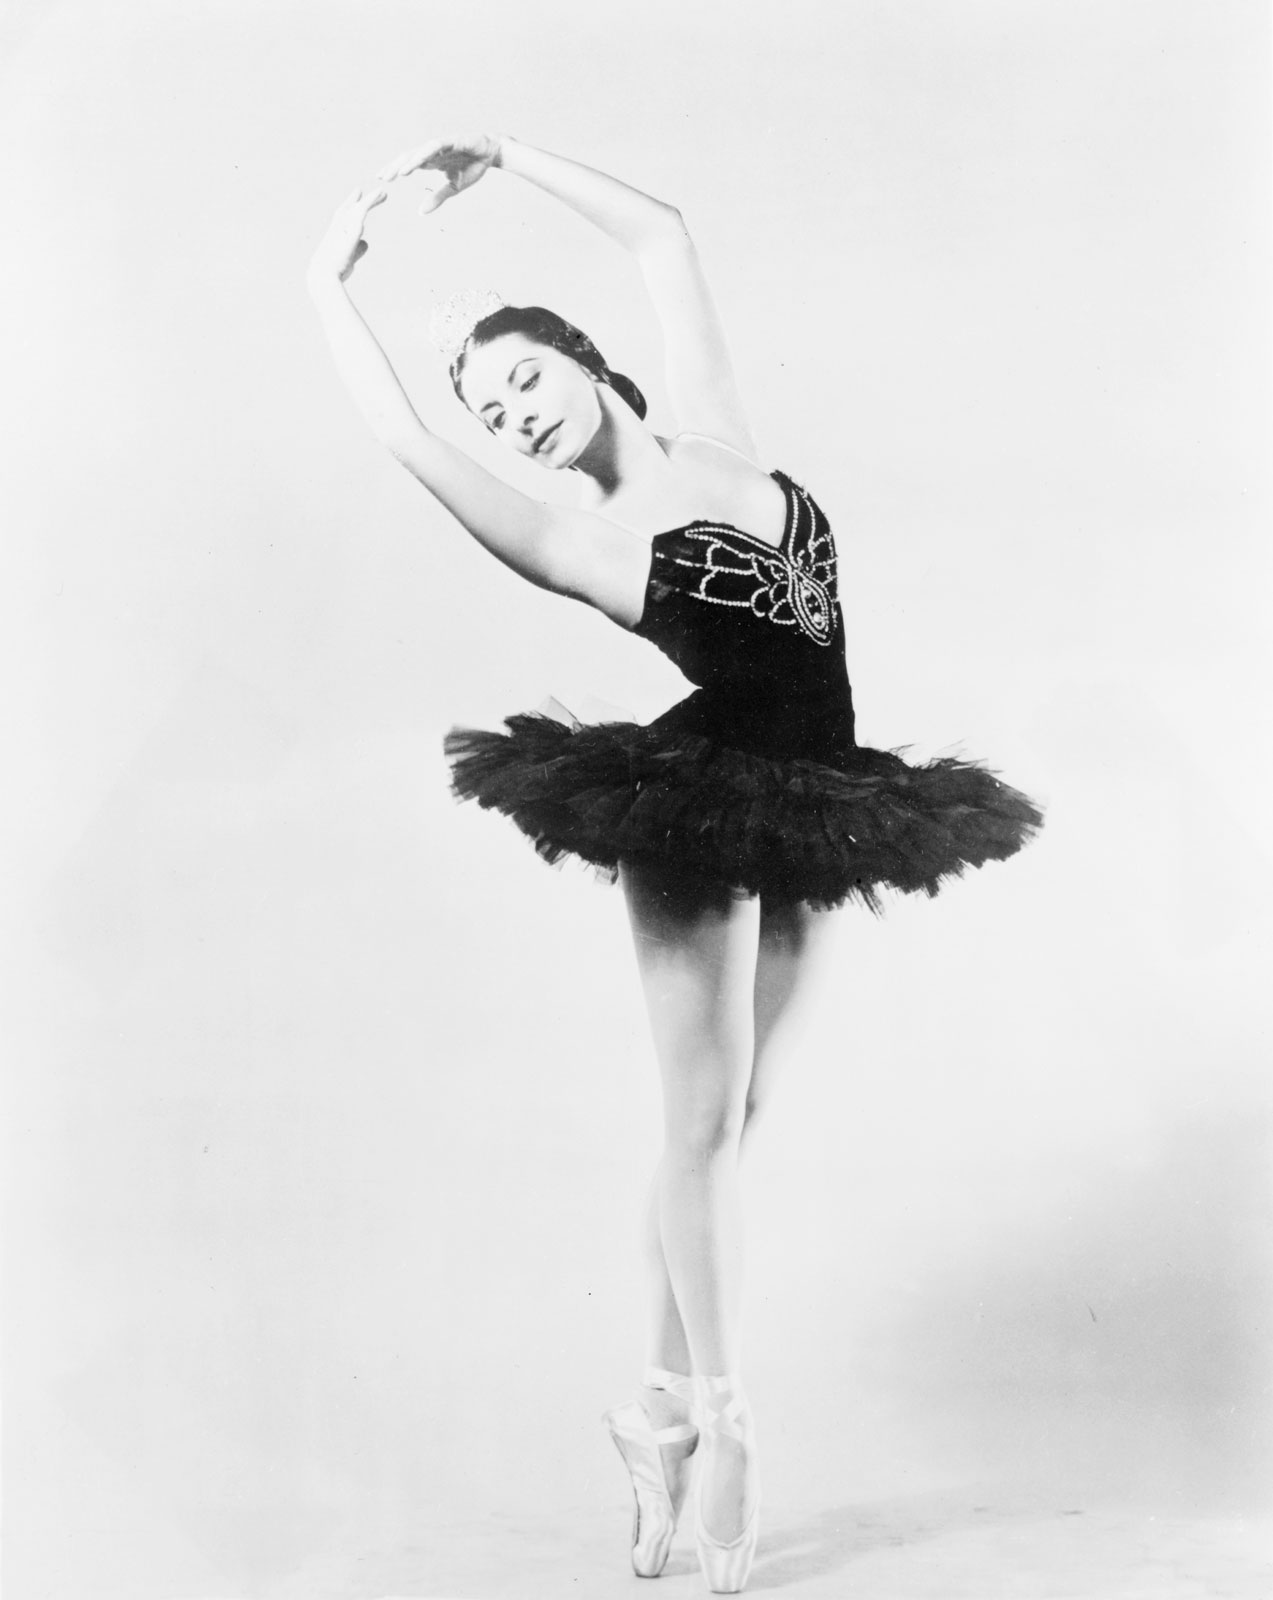 Alicia Alonso as a young ballerina in a black tutu